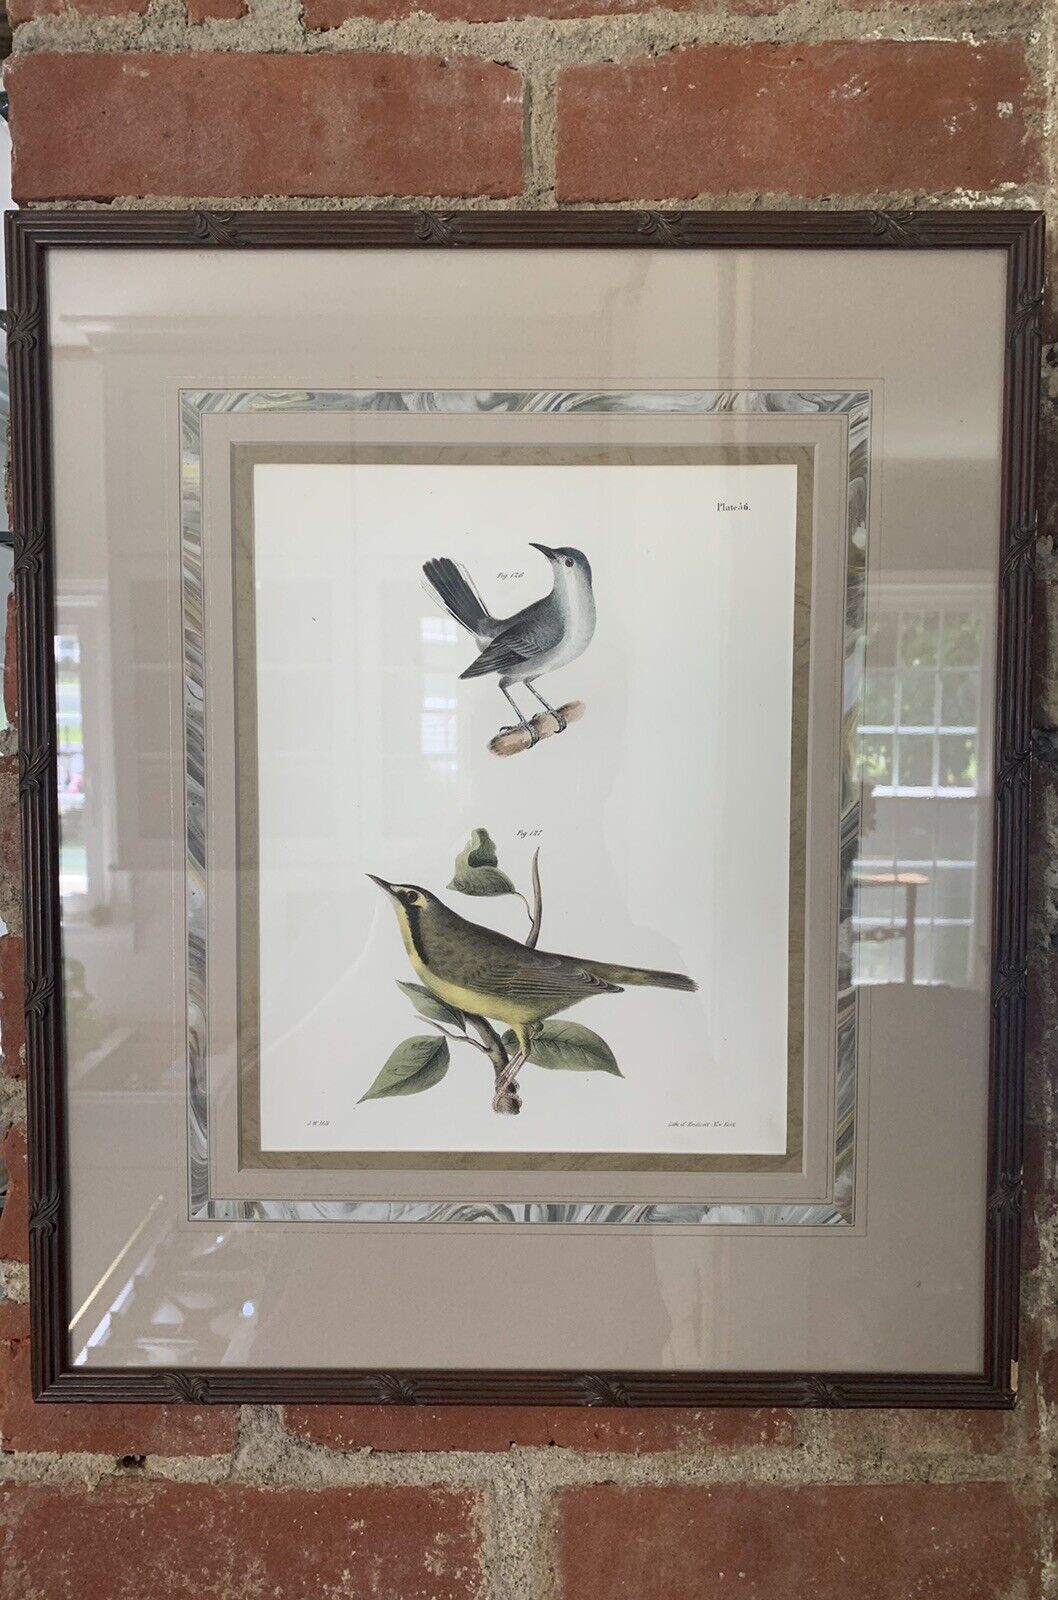 Antique Lithograph JW Hill Ornithology Bird Print 1844 Endicott NY Framed